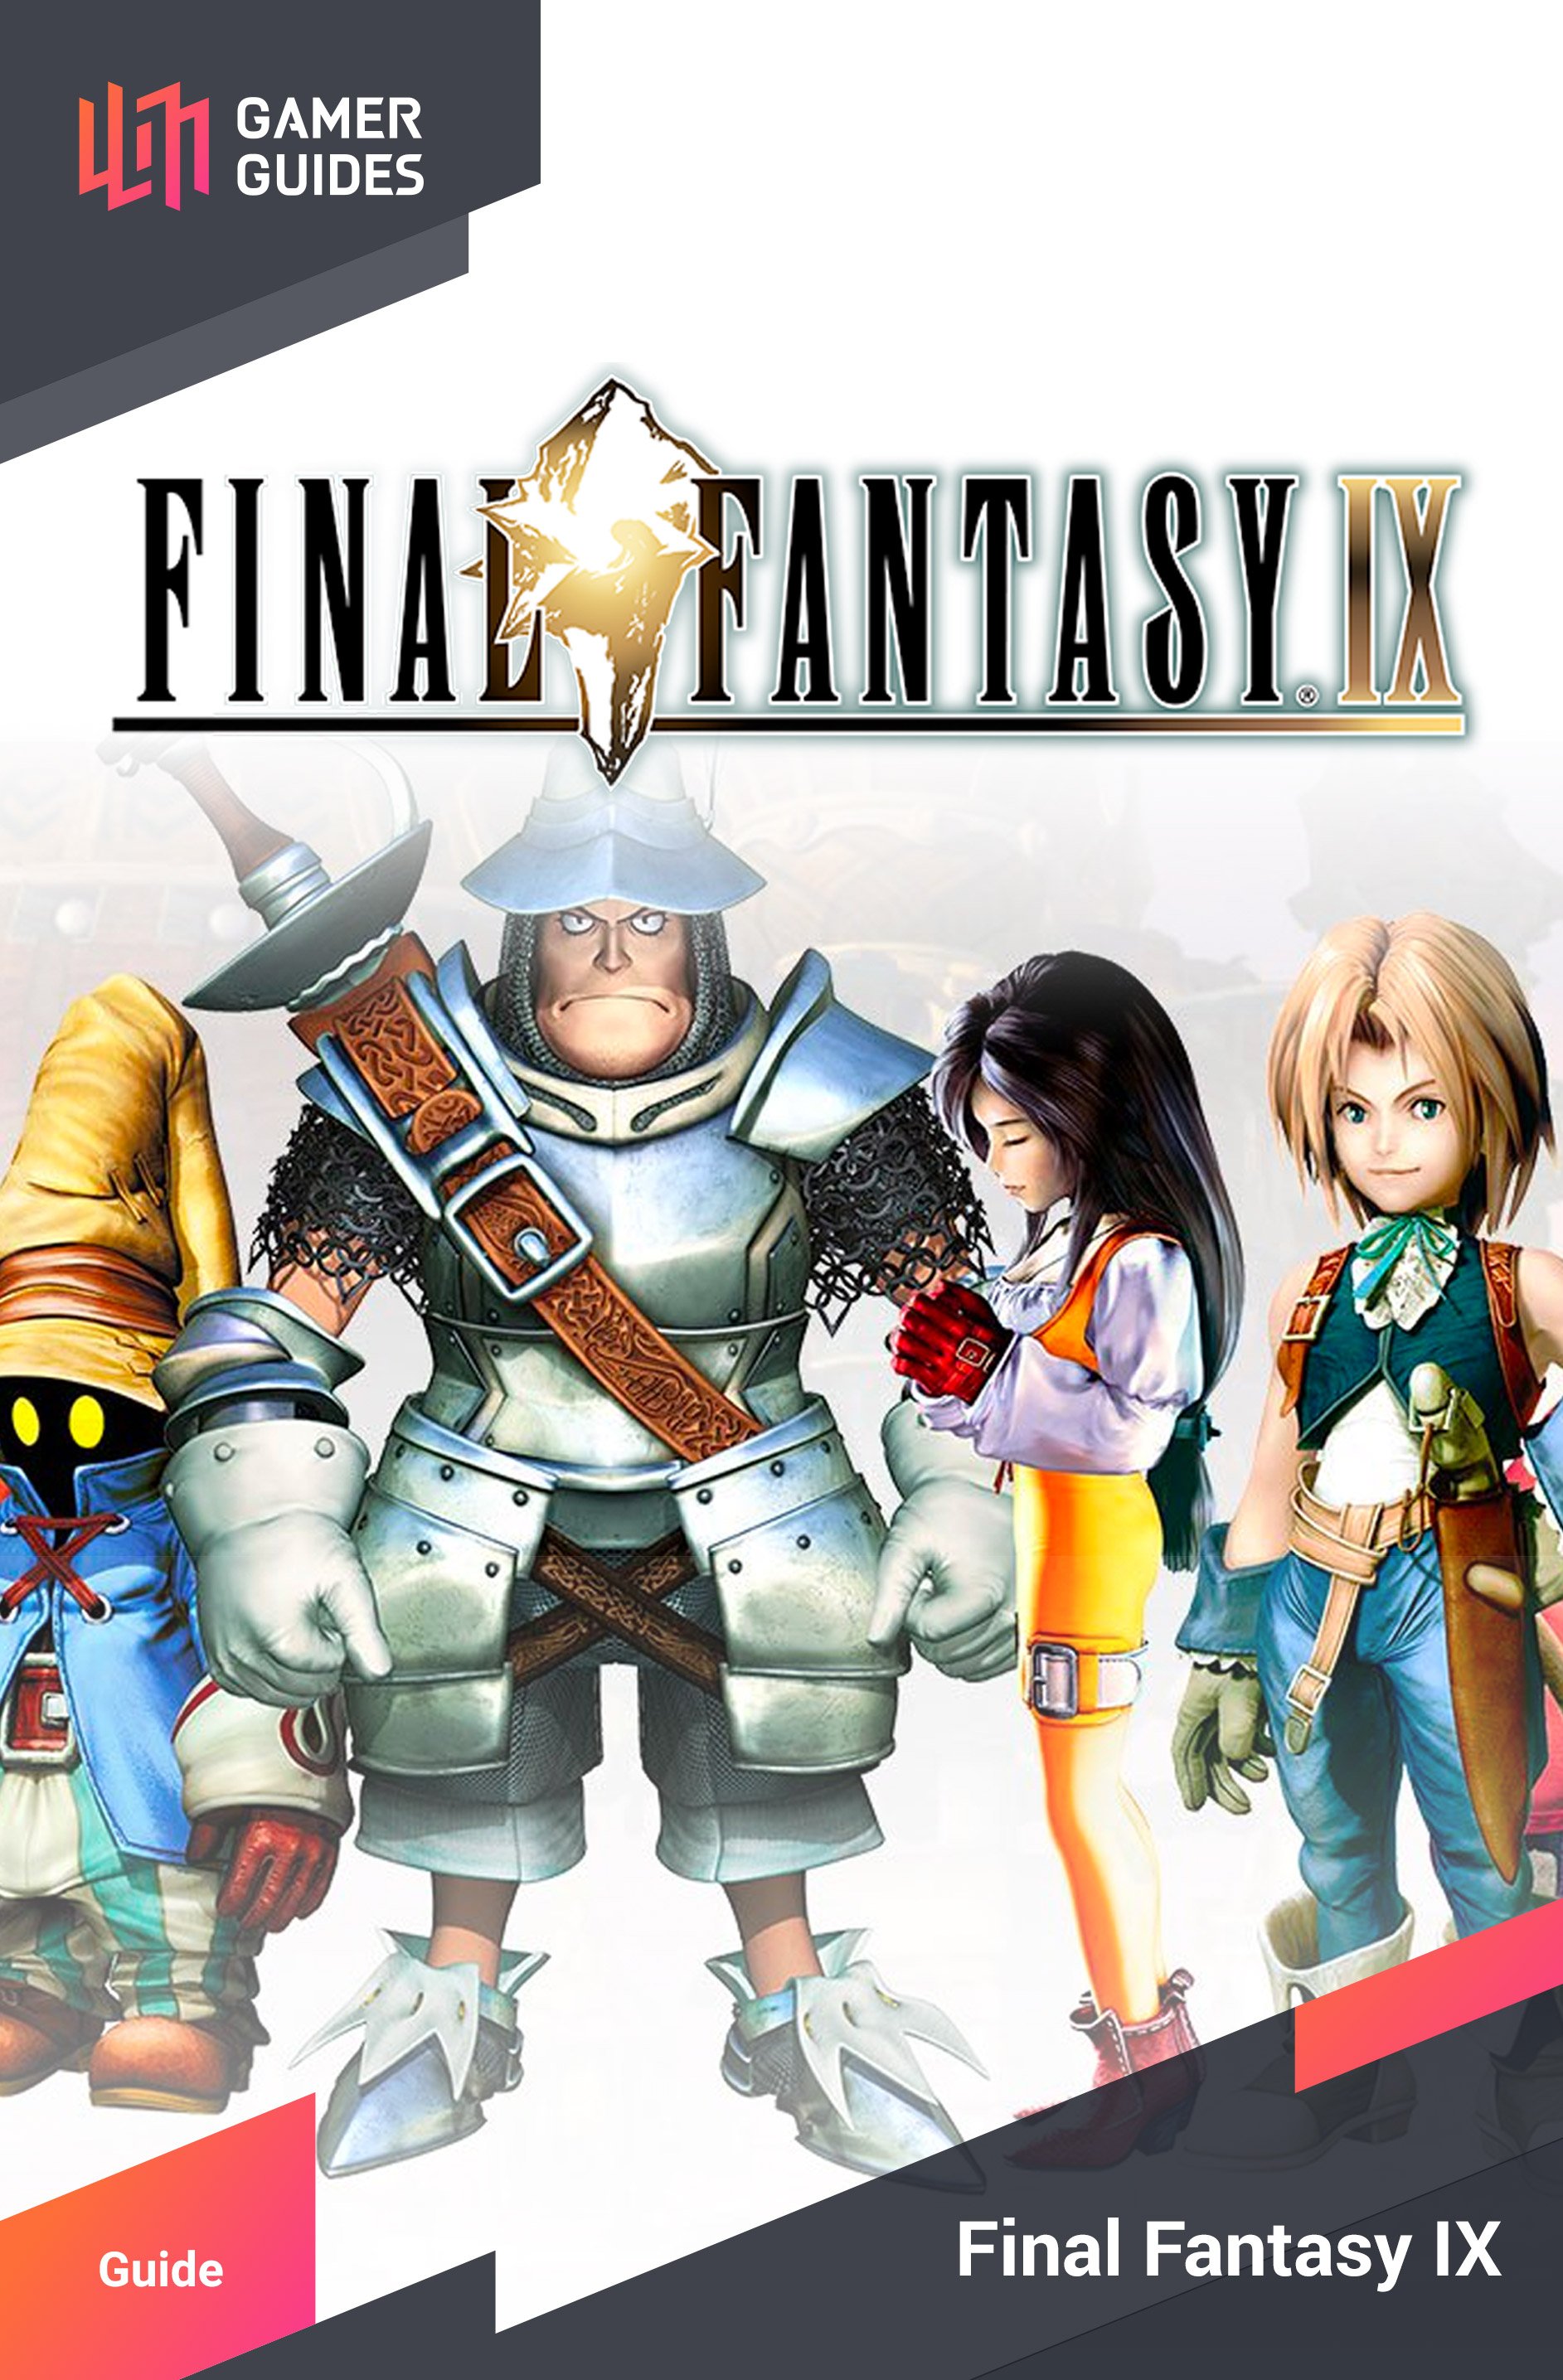 Final Fantasy Ix Gamer Guides